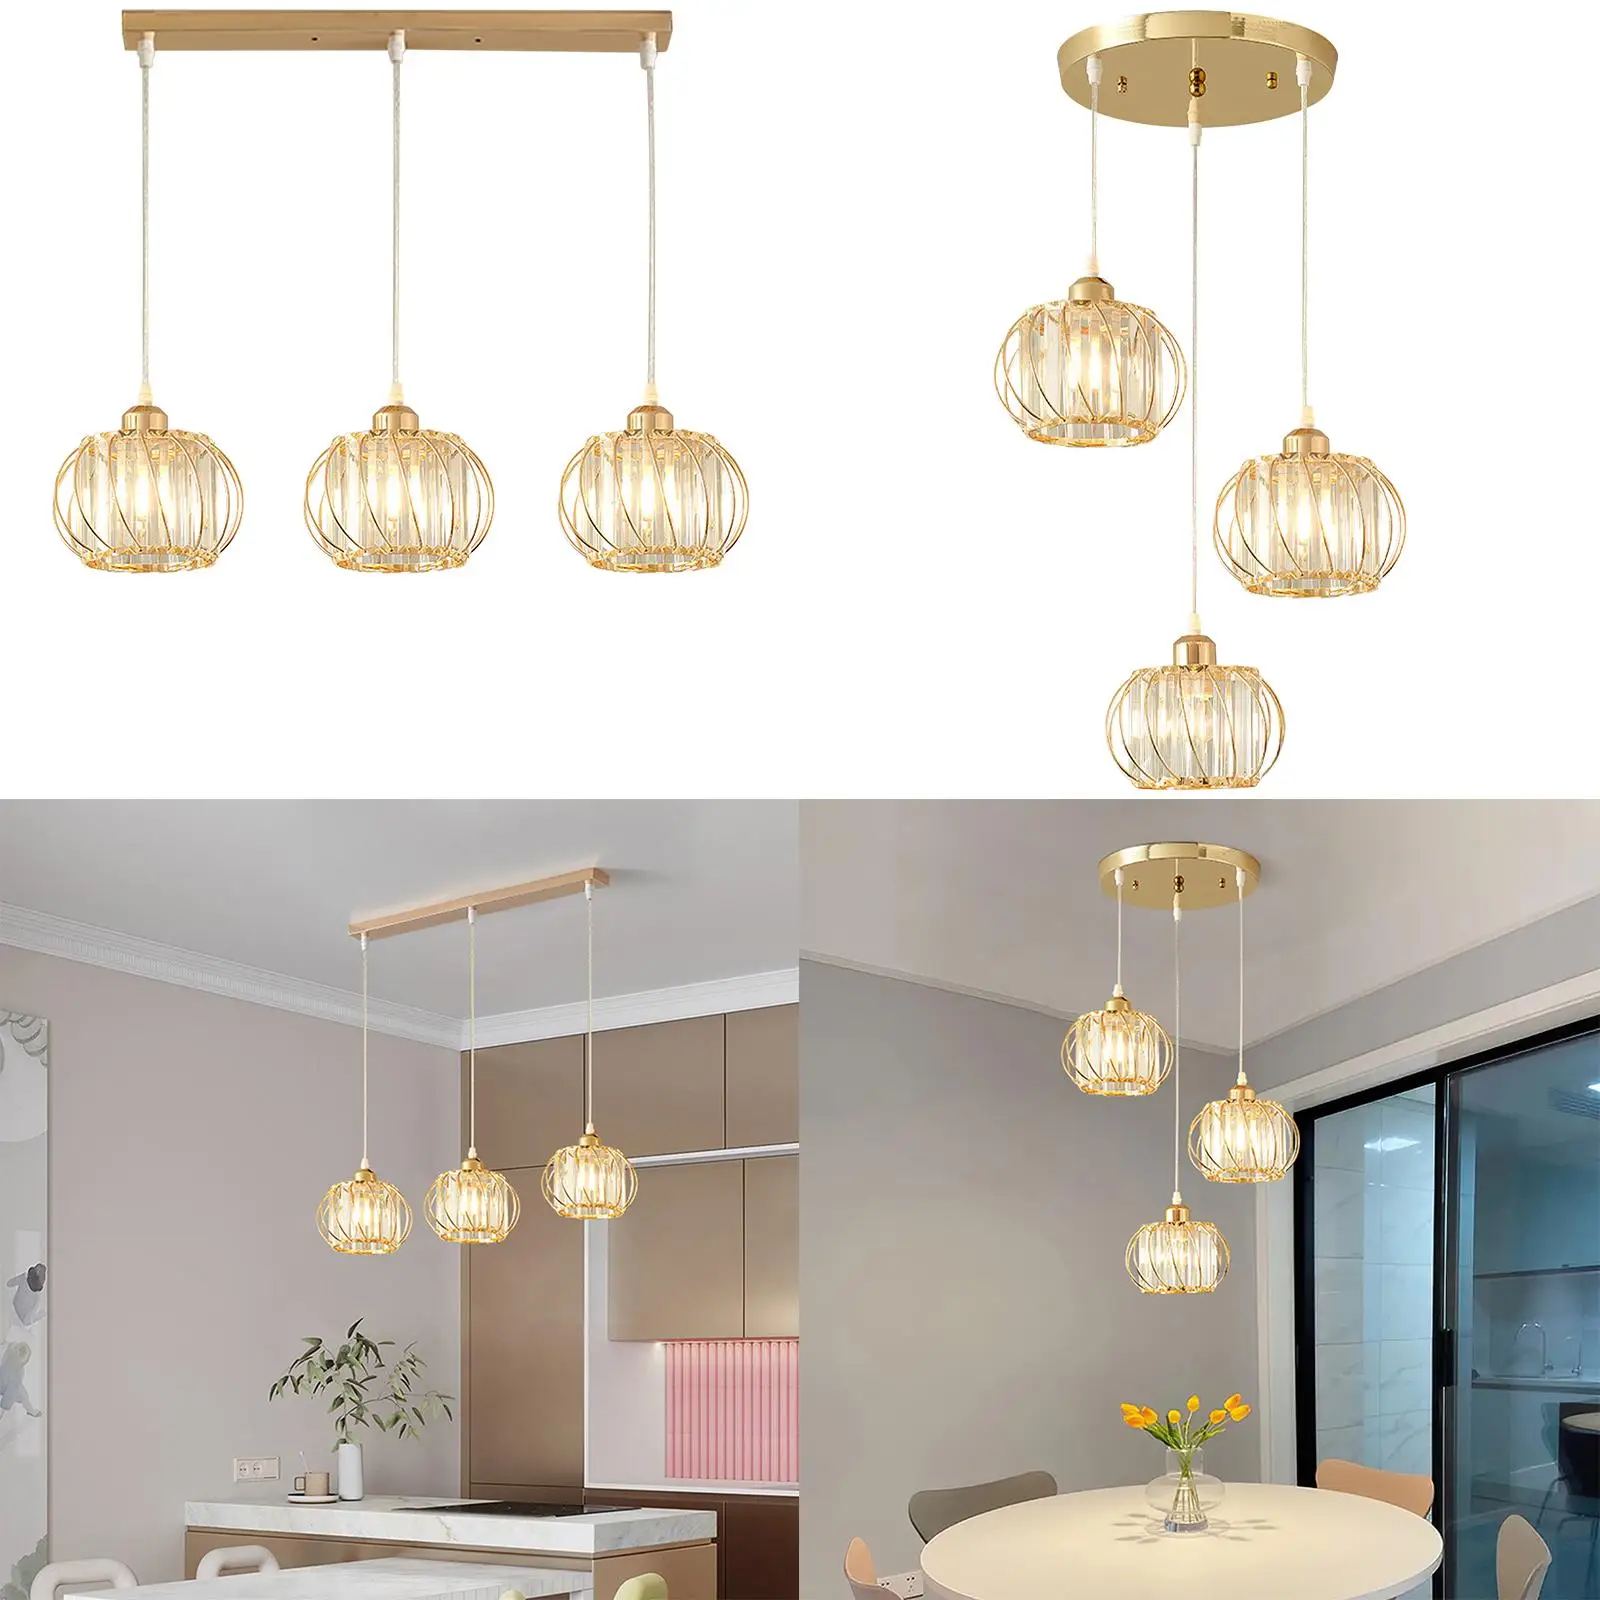  Crystal Pendant Light Fixture, LED Hanging Light, Crystal Chandeliers for Restaurant, Dining Room, Cafe, Bar, Apartment